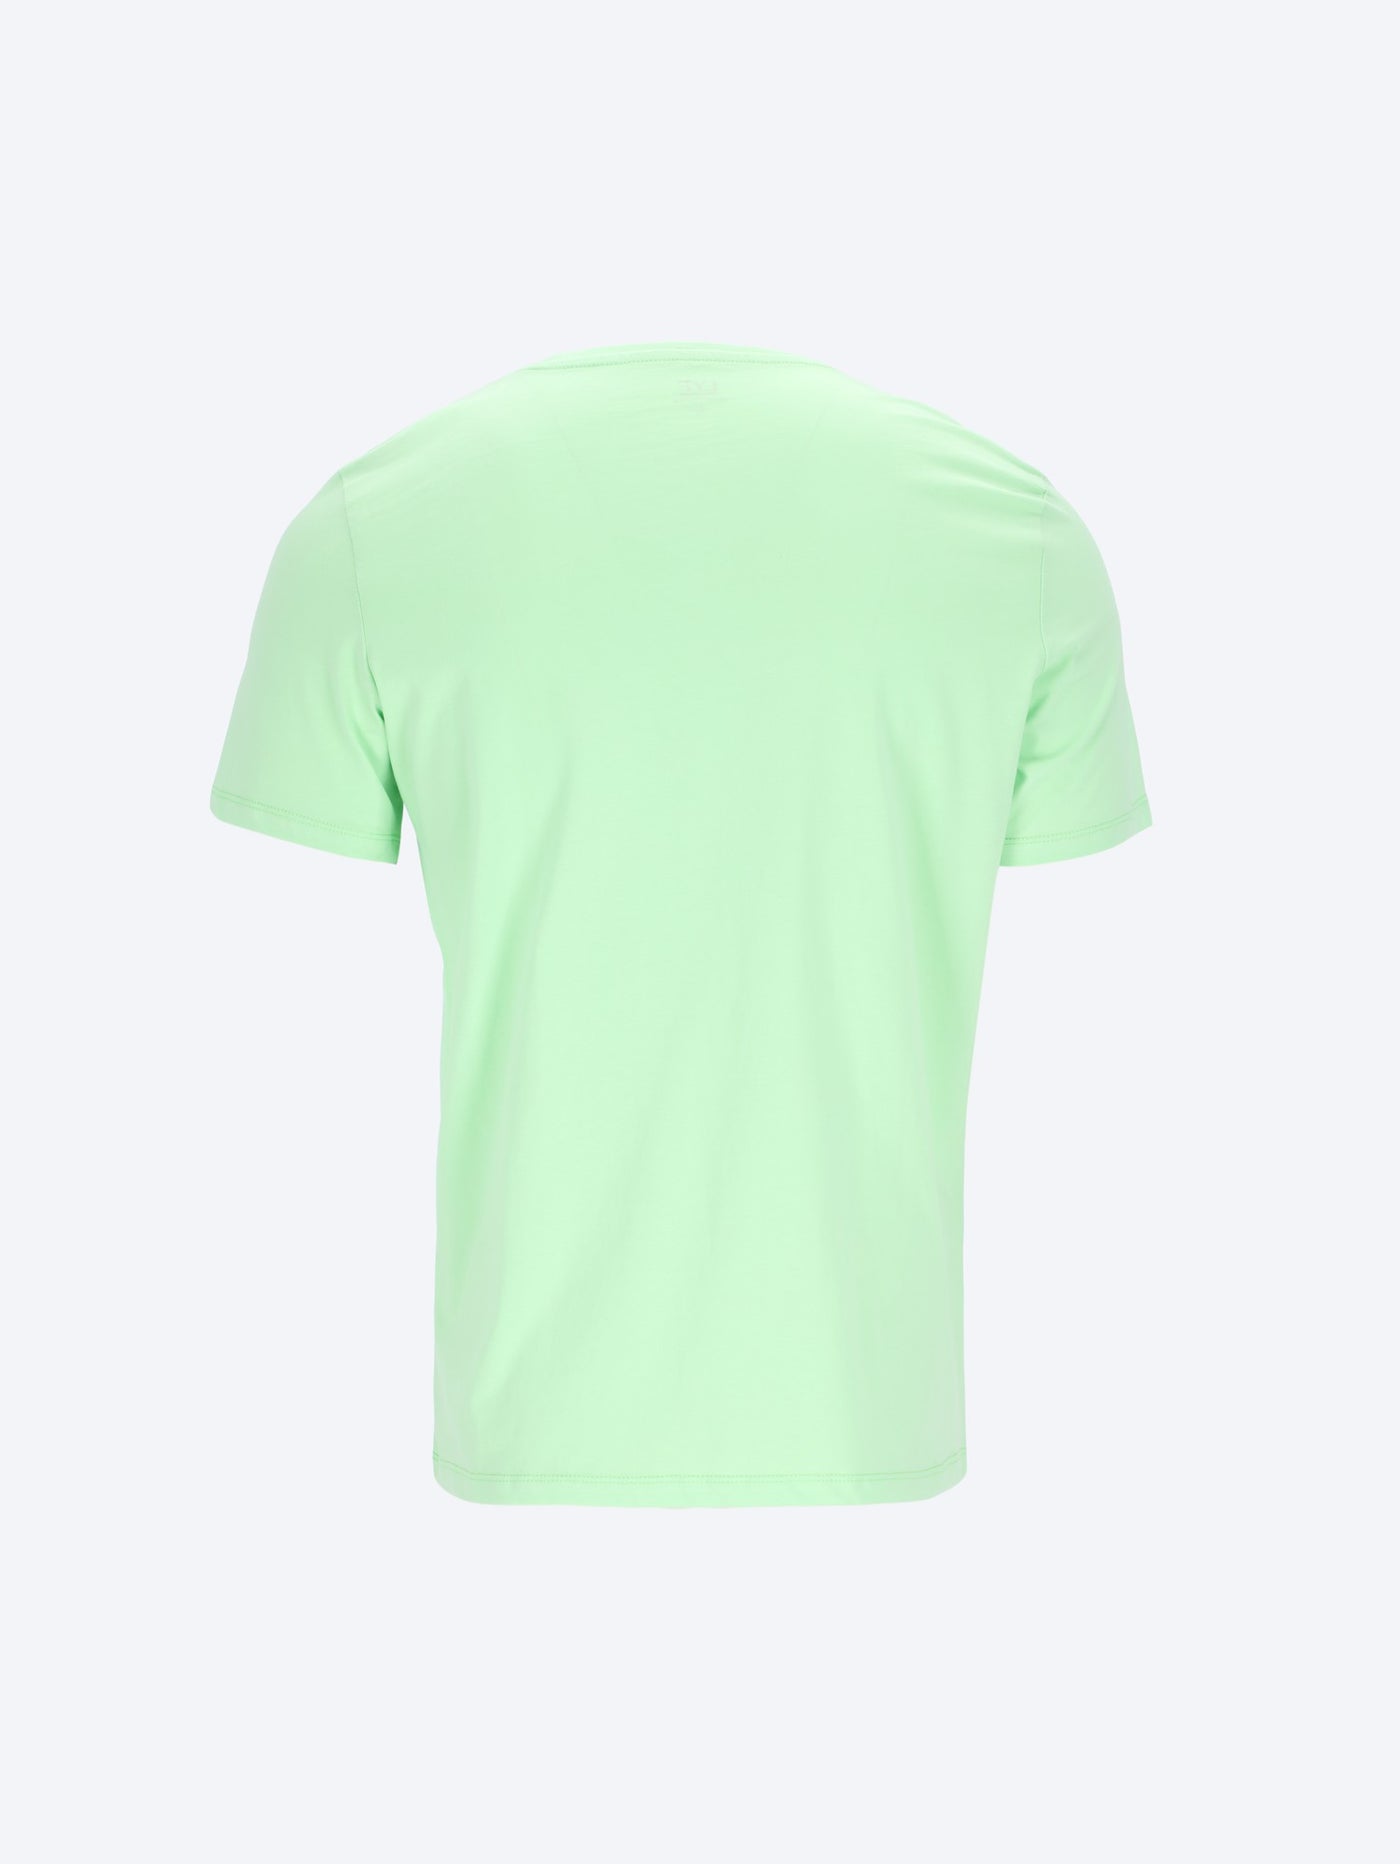 Men's Front Print T-Shirt